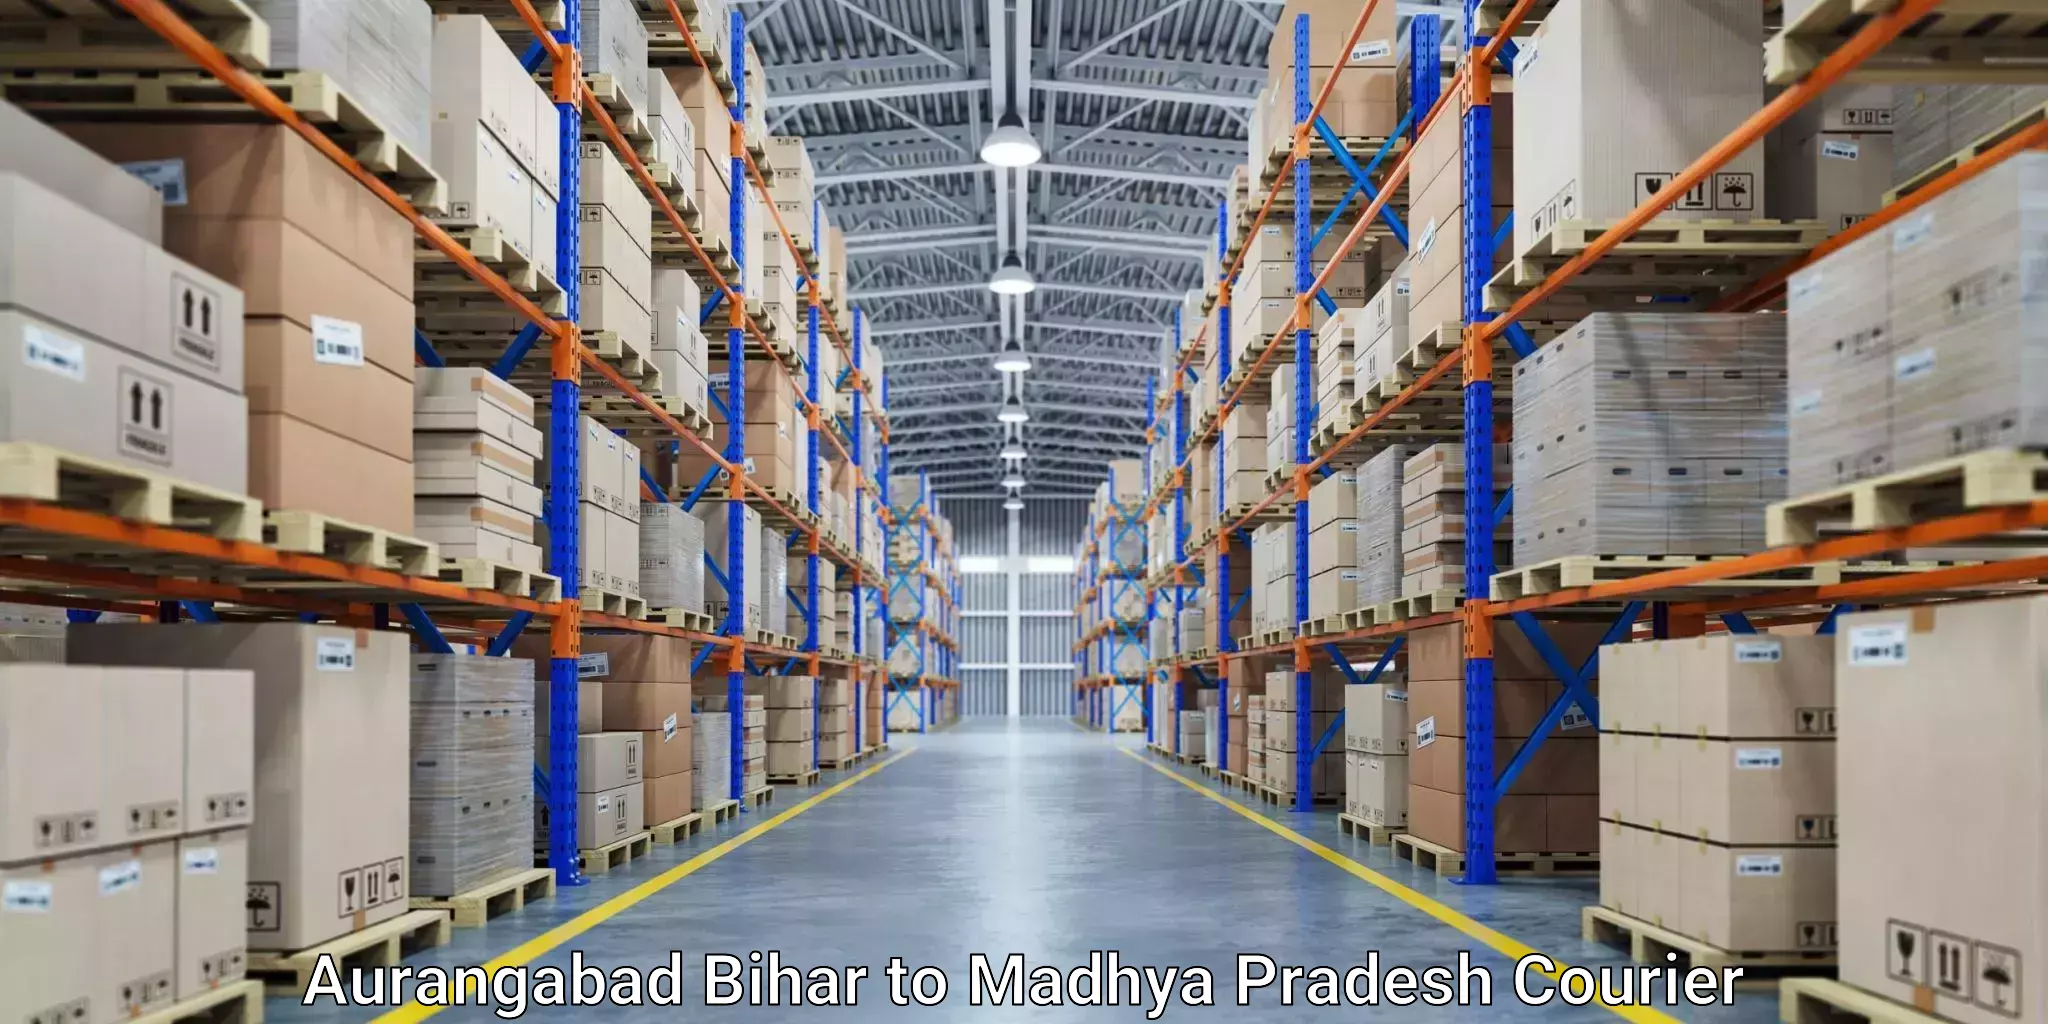 Pharmaceutical courier Aurangabad Bihar to Tendukheda